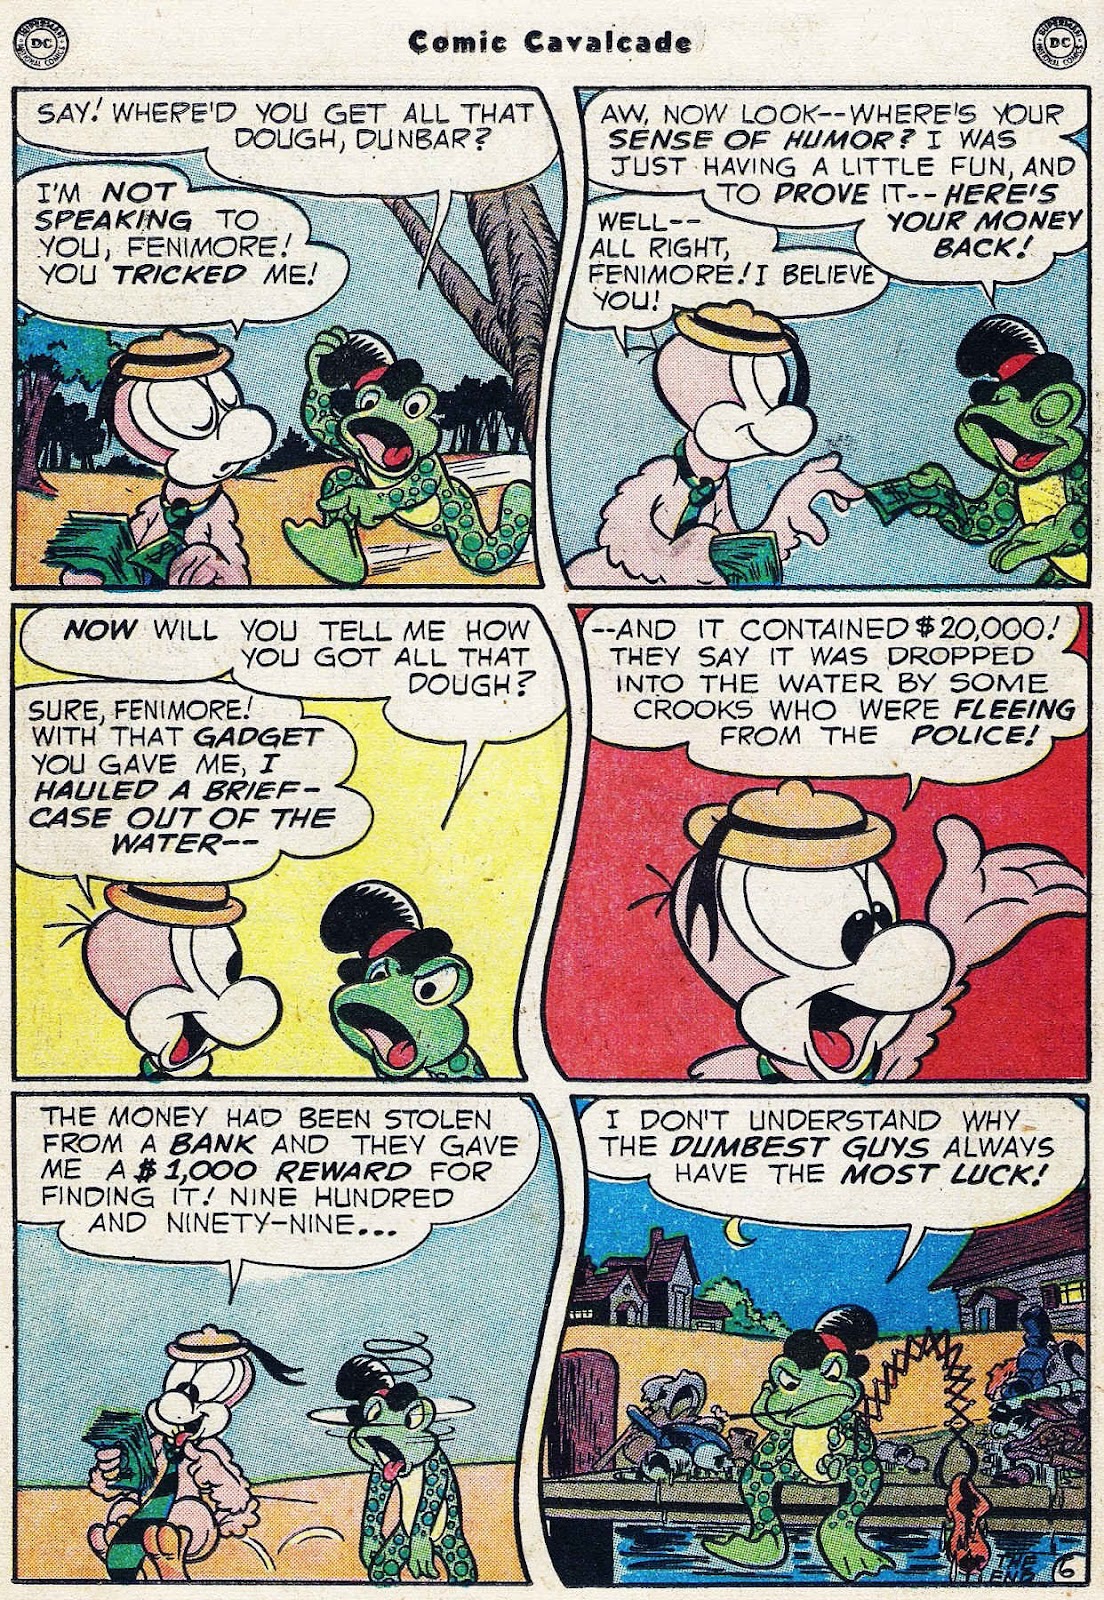 Comic Cavalcade issue 37 - Page 38